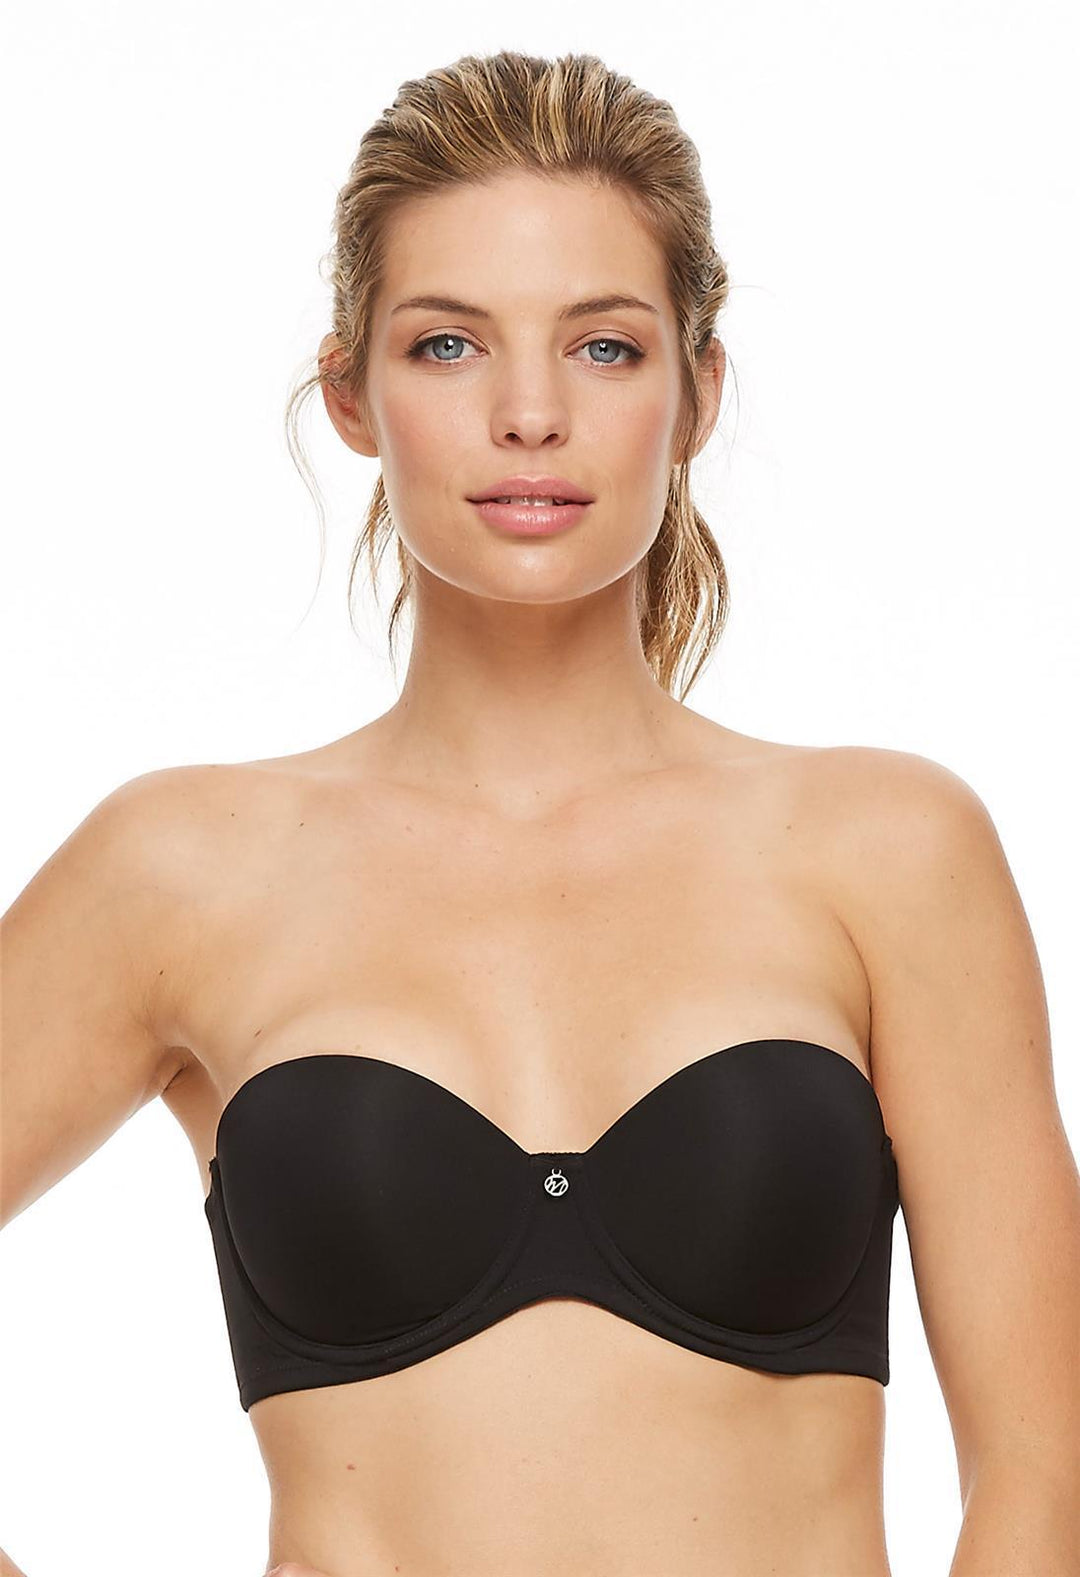 Mierside 103398 Strapless bra for women Sexy Half Cup Bralette